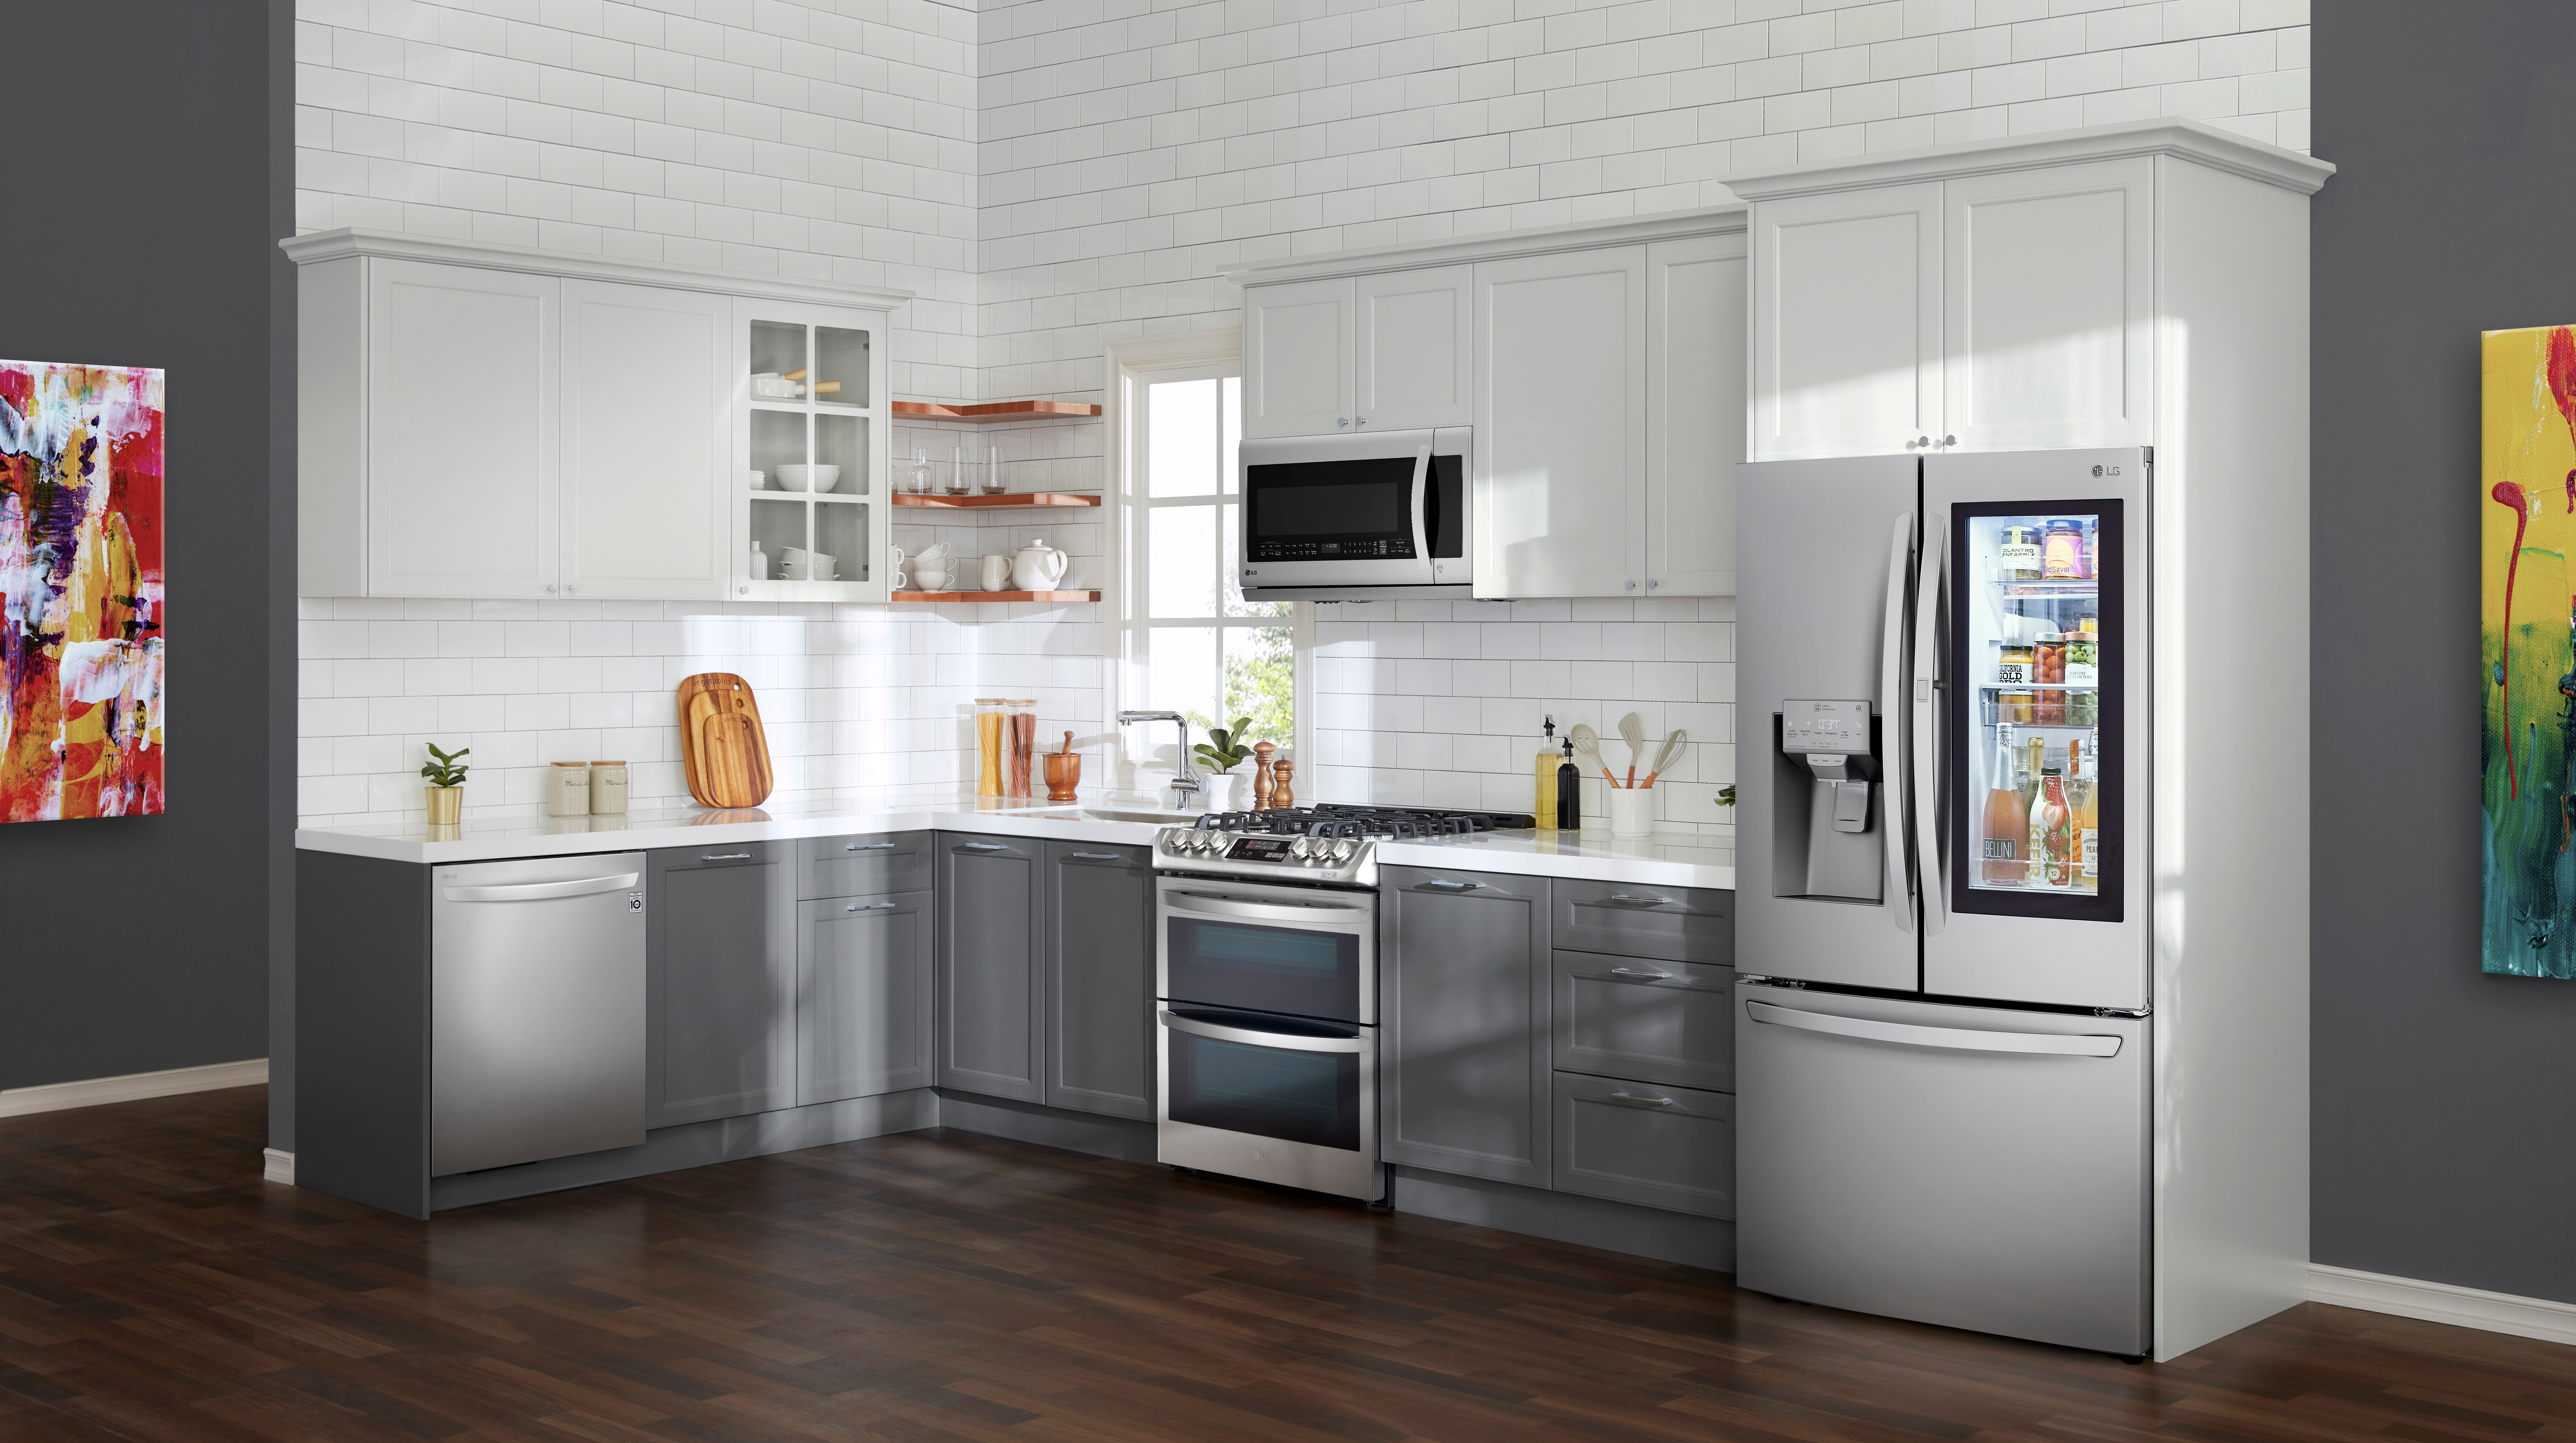 LG kitchen with InstaView fridge